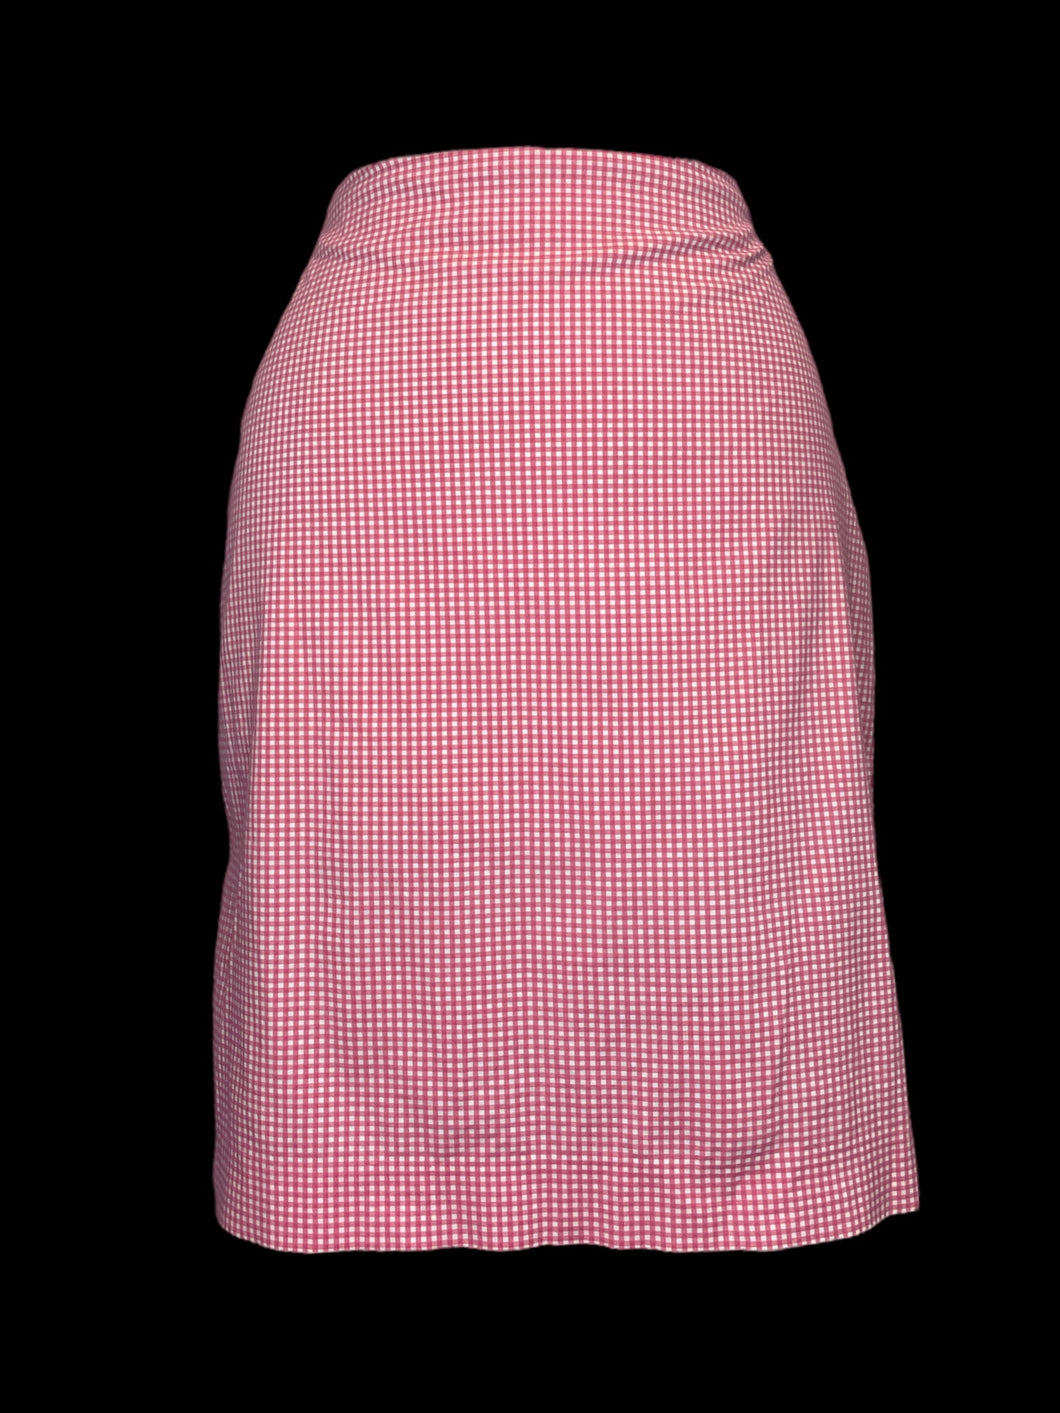 M Pink & white gingham pencil skirt w/ side zipper